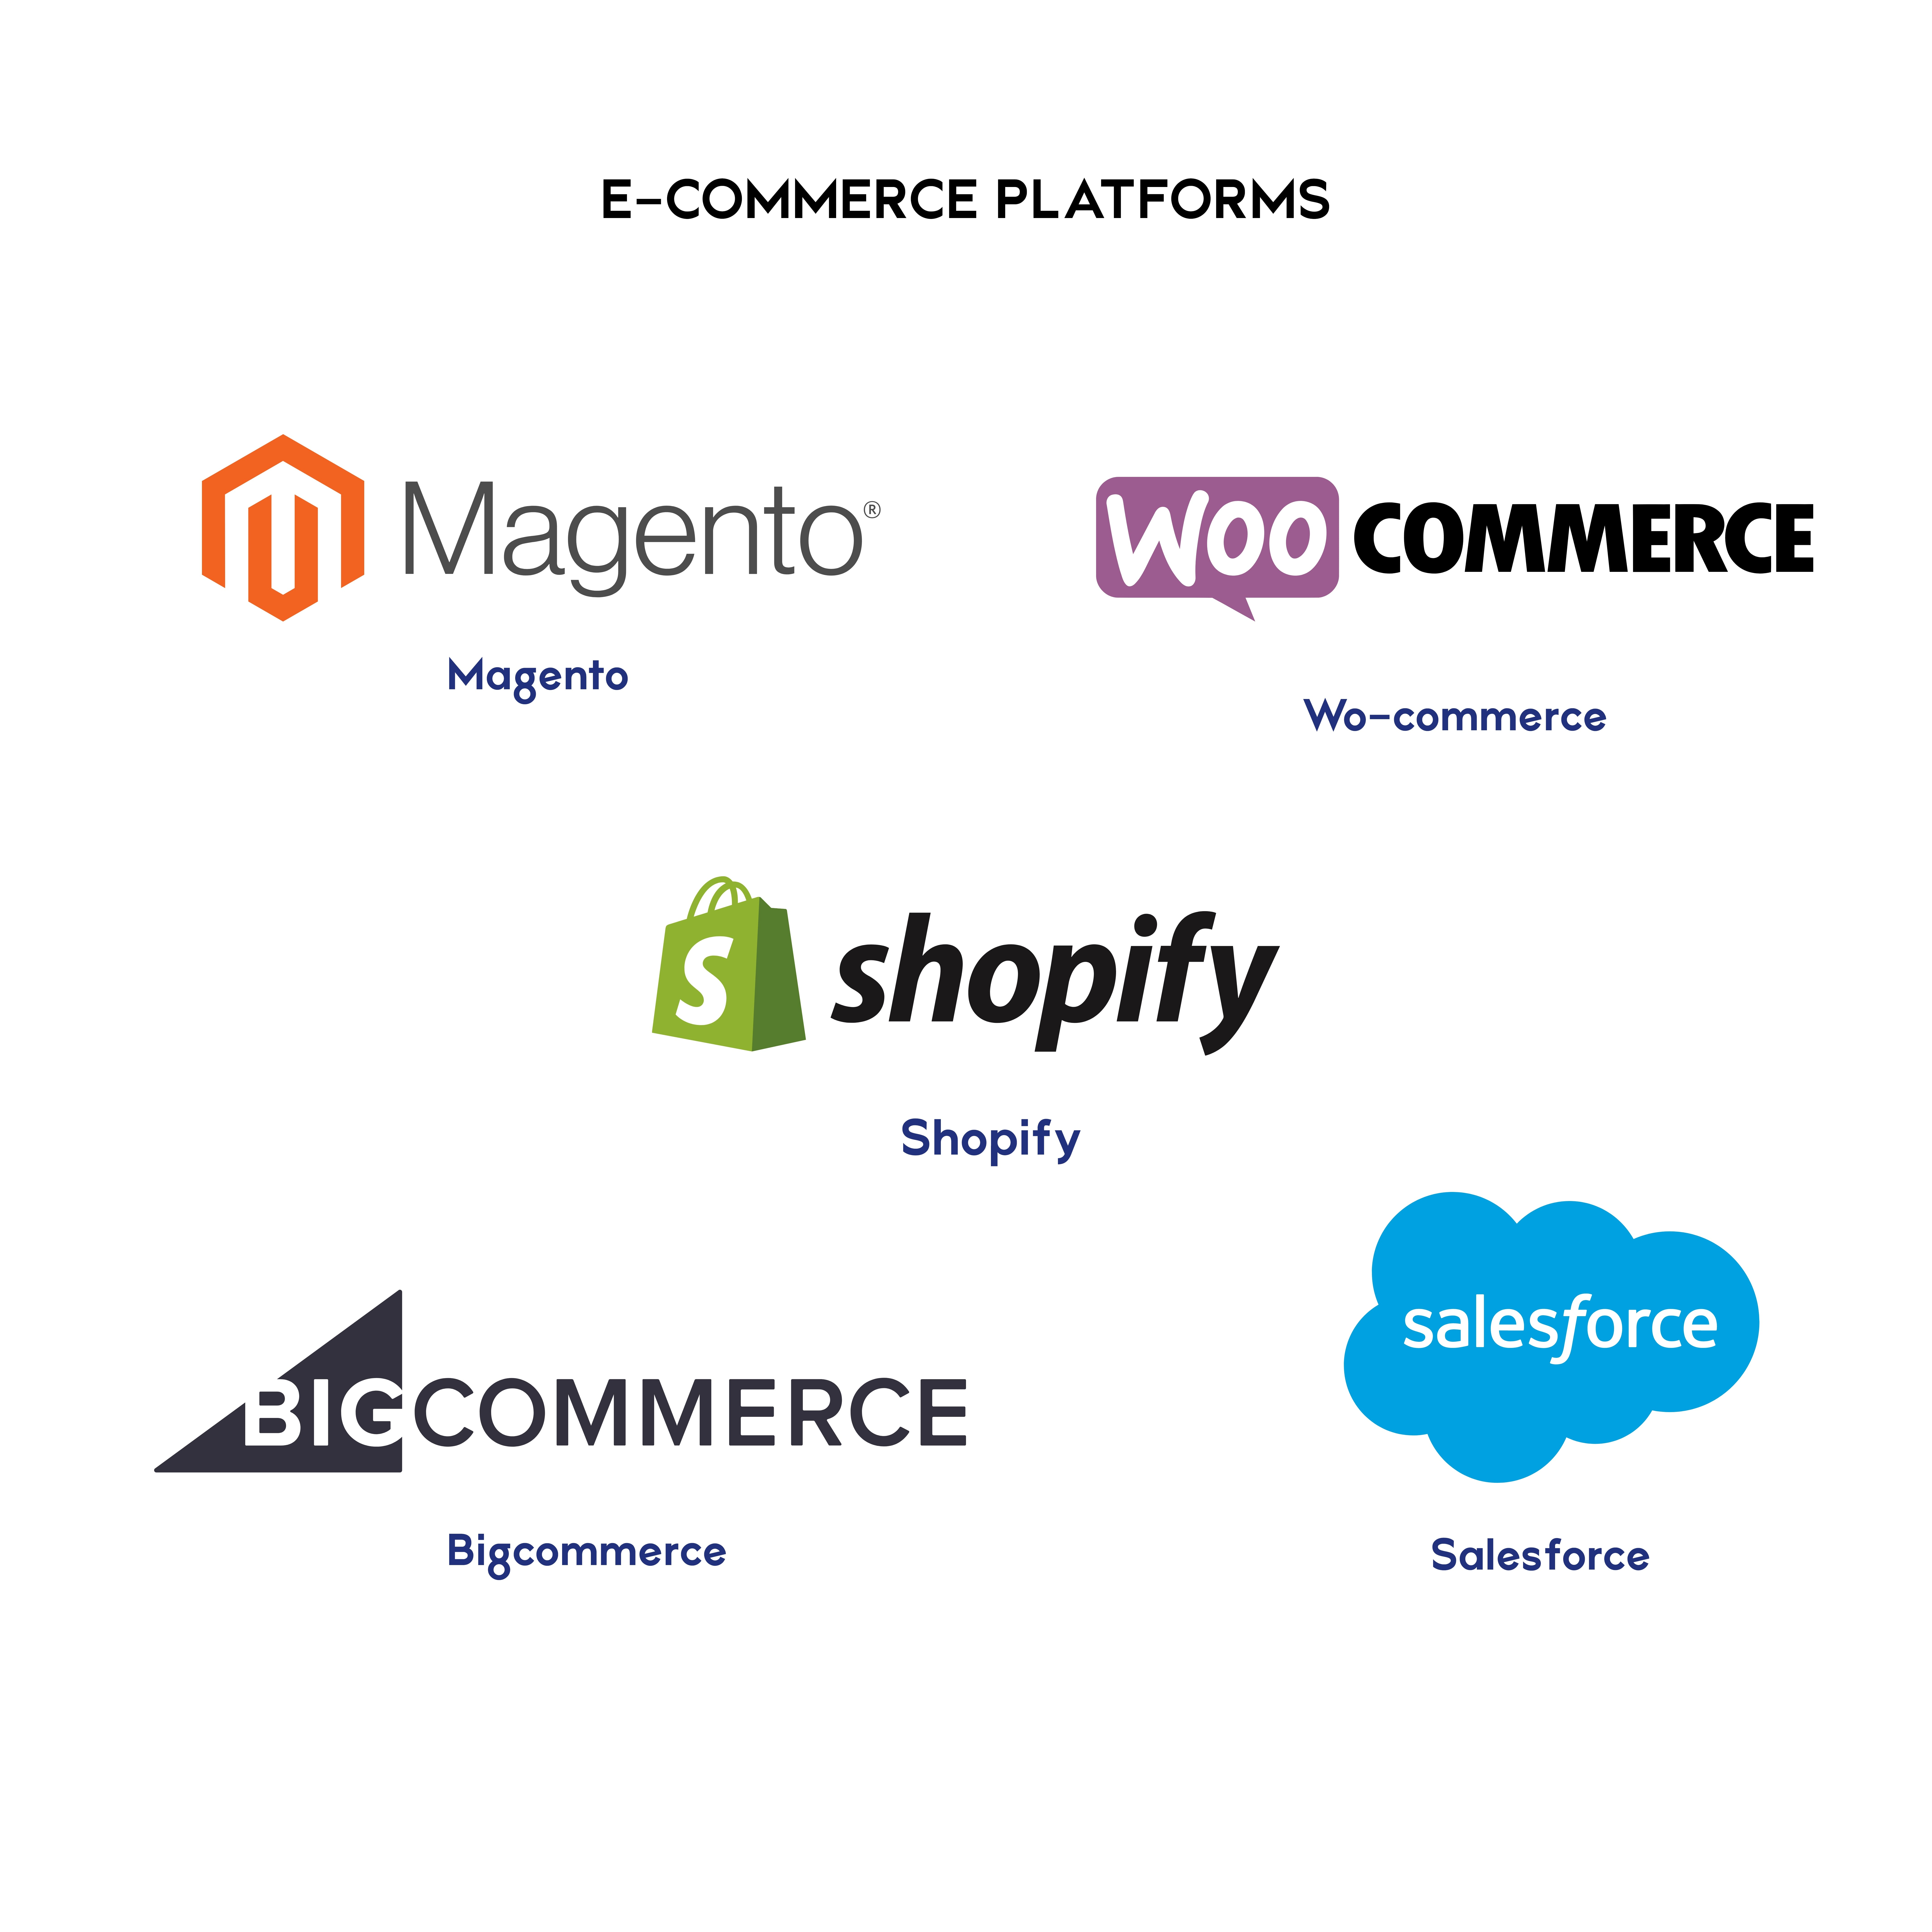 E-Commerce platforms